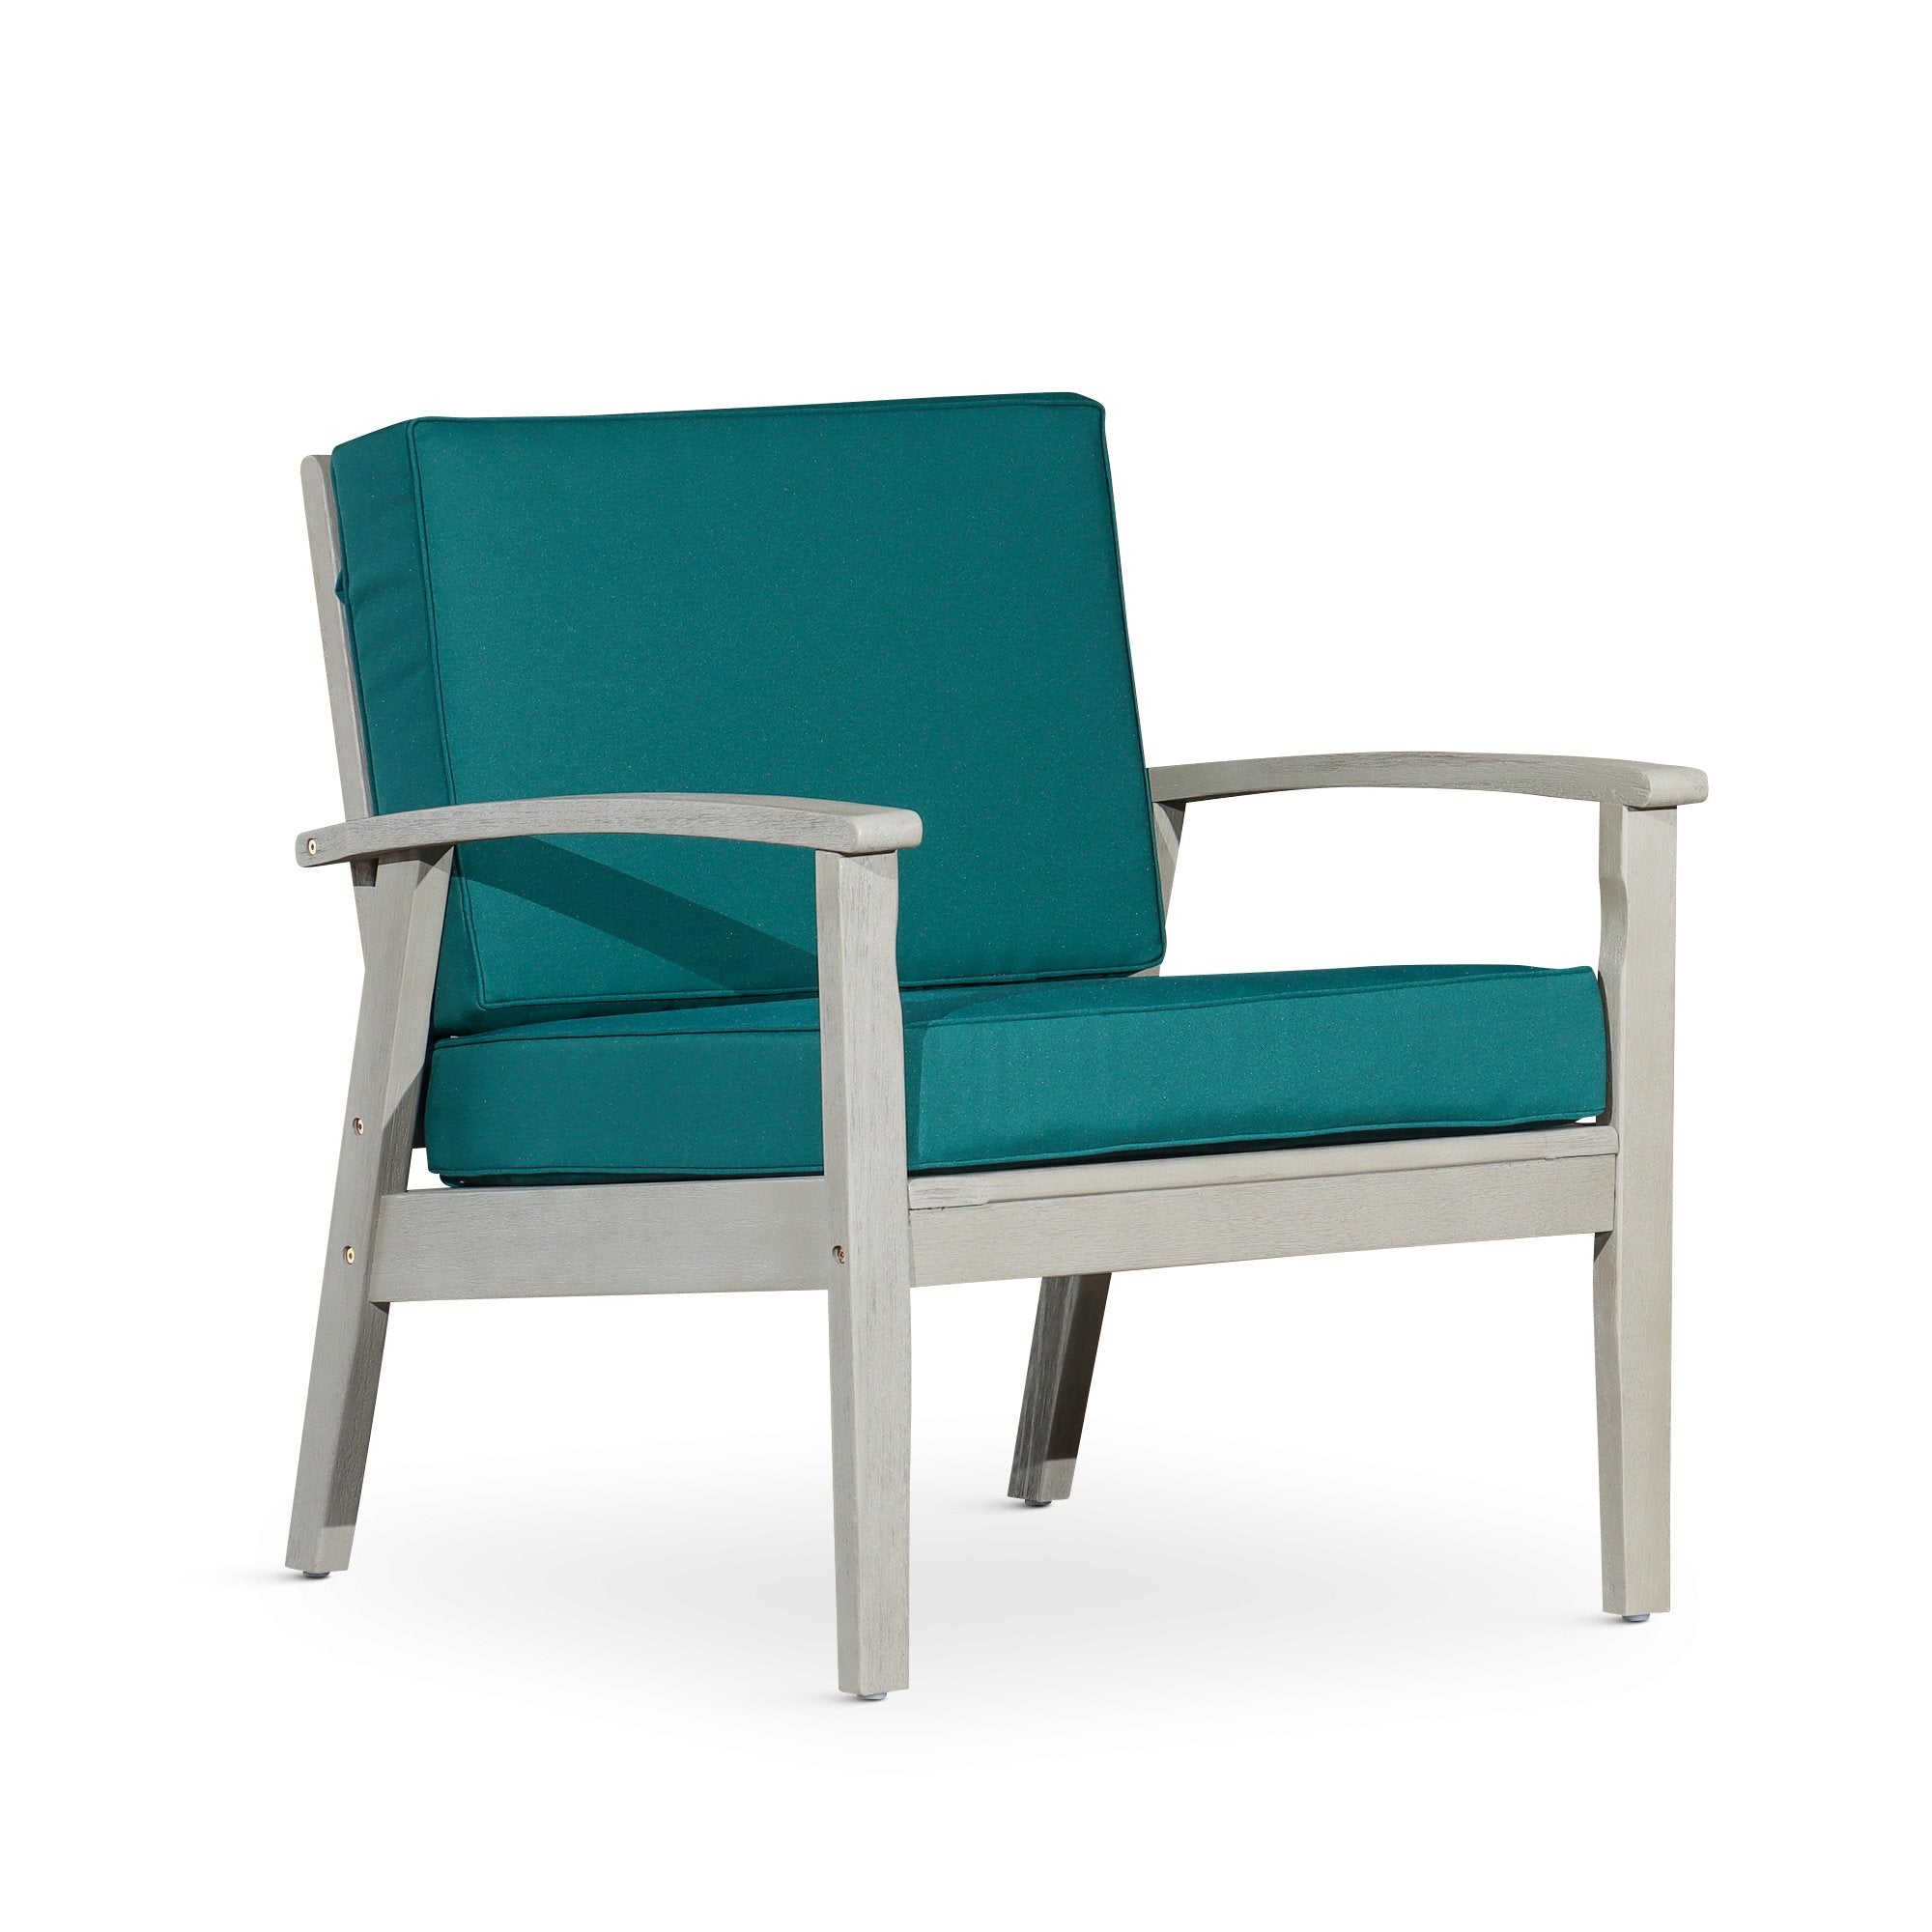 Deep-Seat-Outdoor-Chair,-Driftwood-Gray-Finish,-Dark-Green-Cushions-Outdoor-Chairs